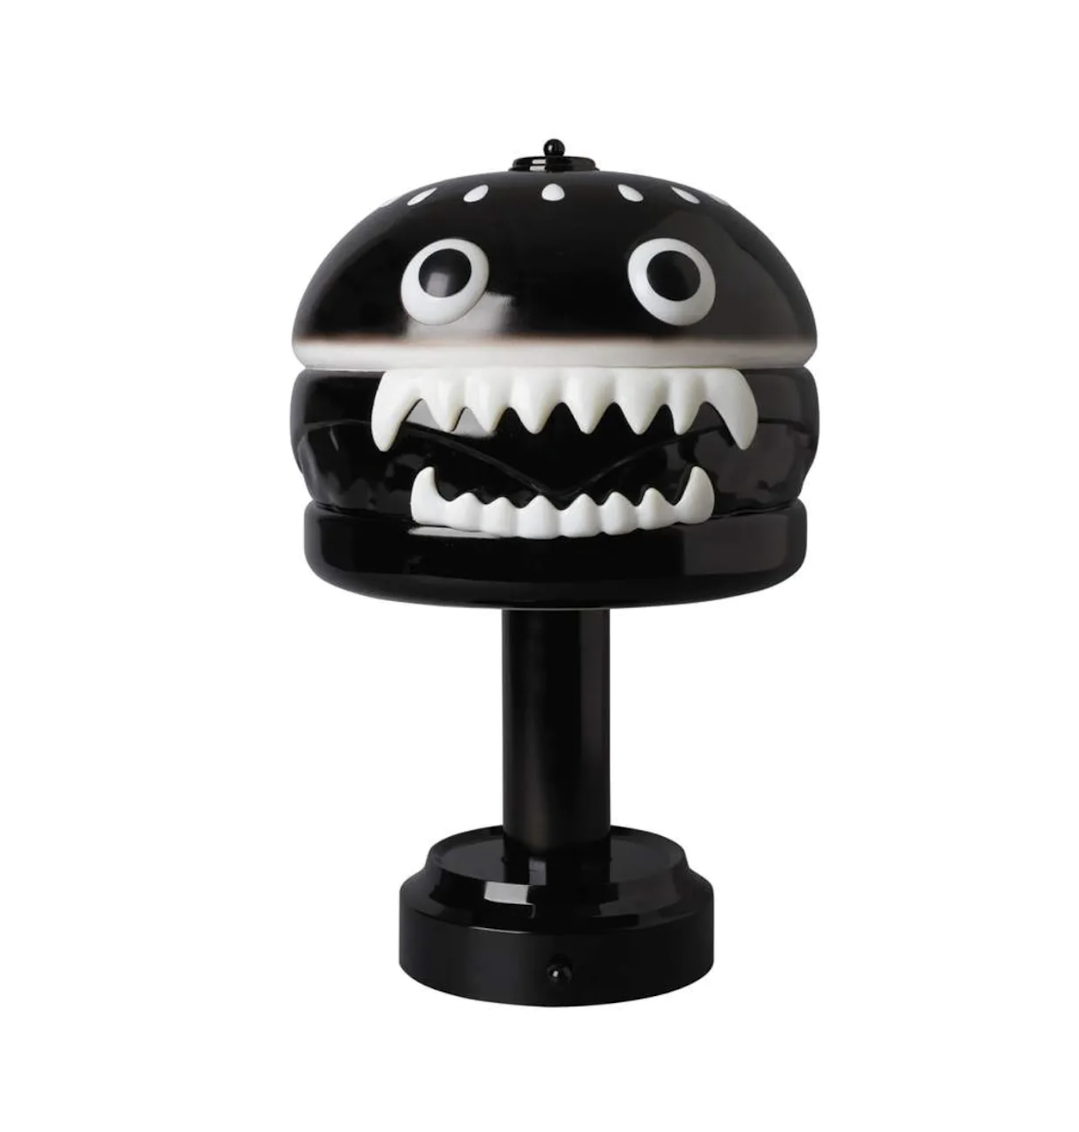 Undercover Hamburger Lamp Black by Art Toys – YangGallery